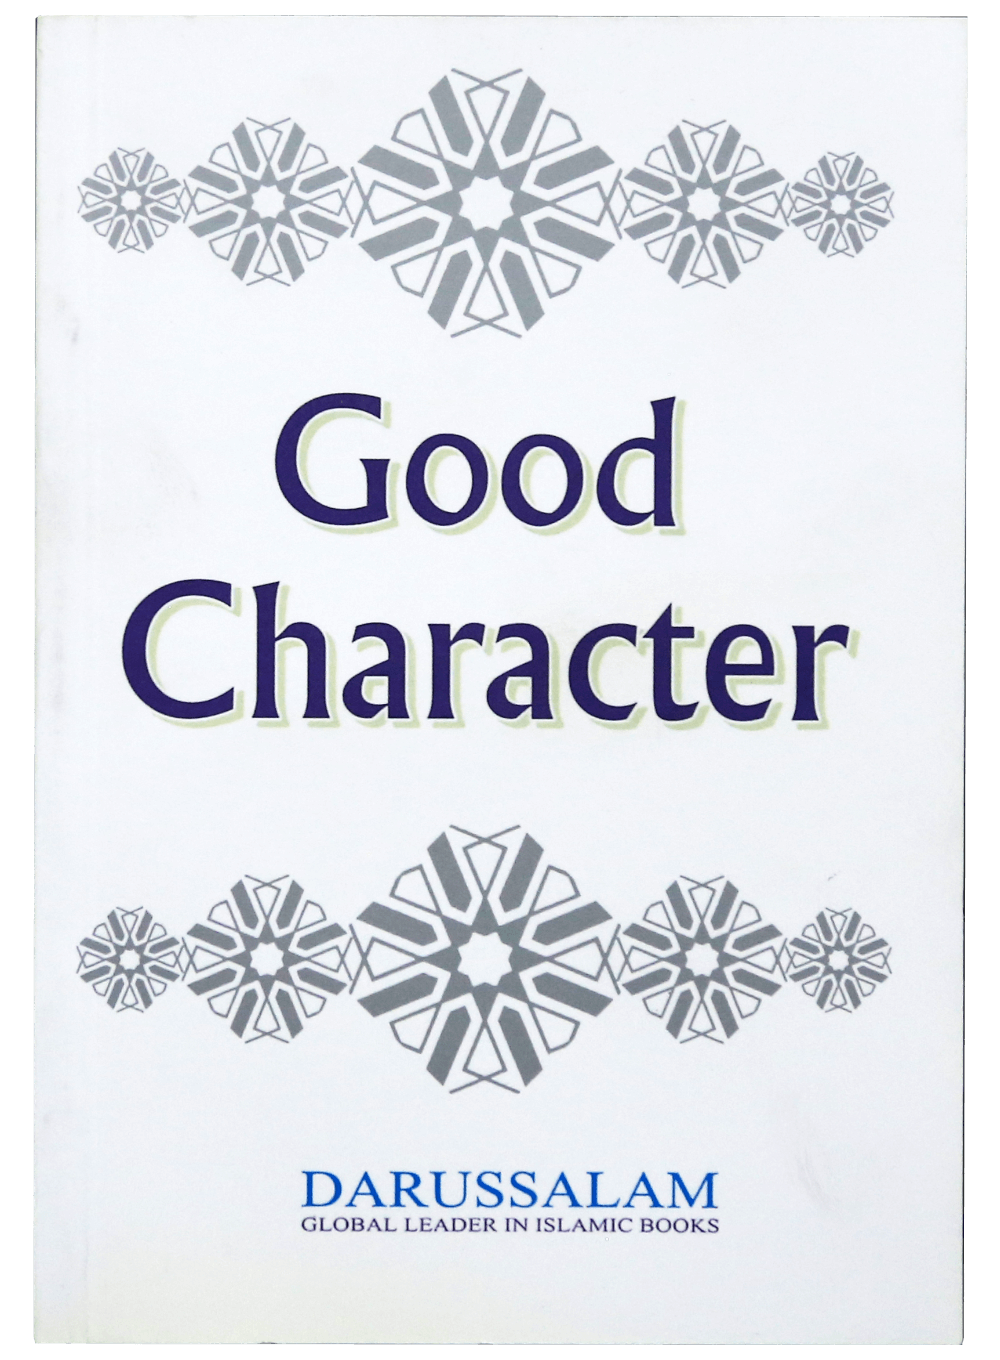 good-character-darussalam-20180411-164634